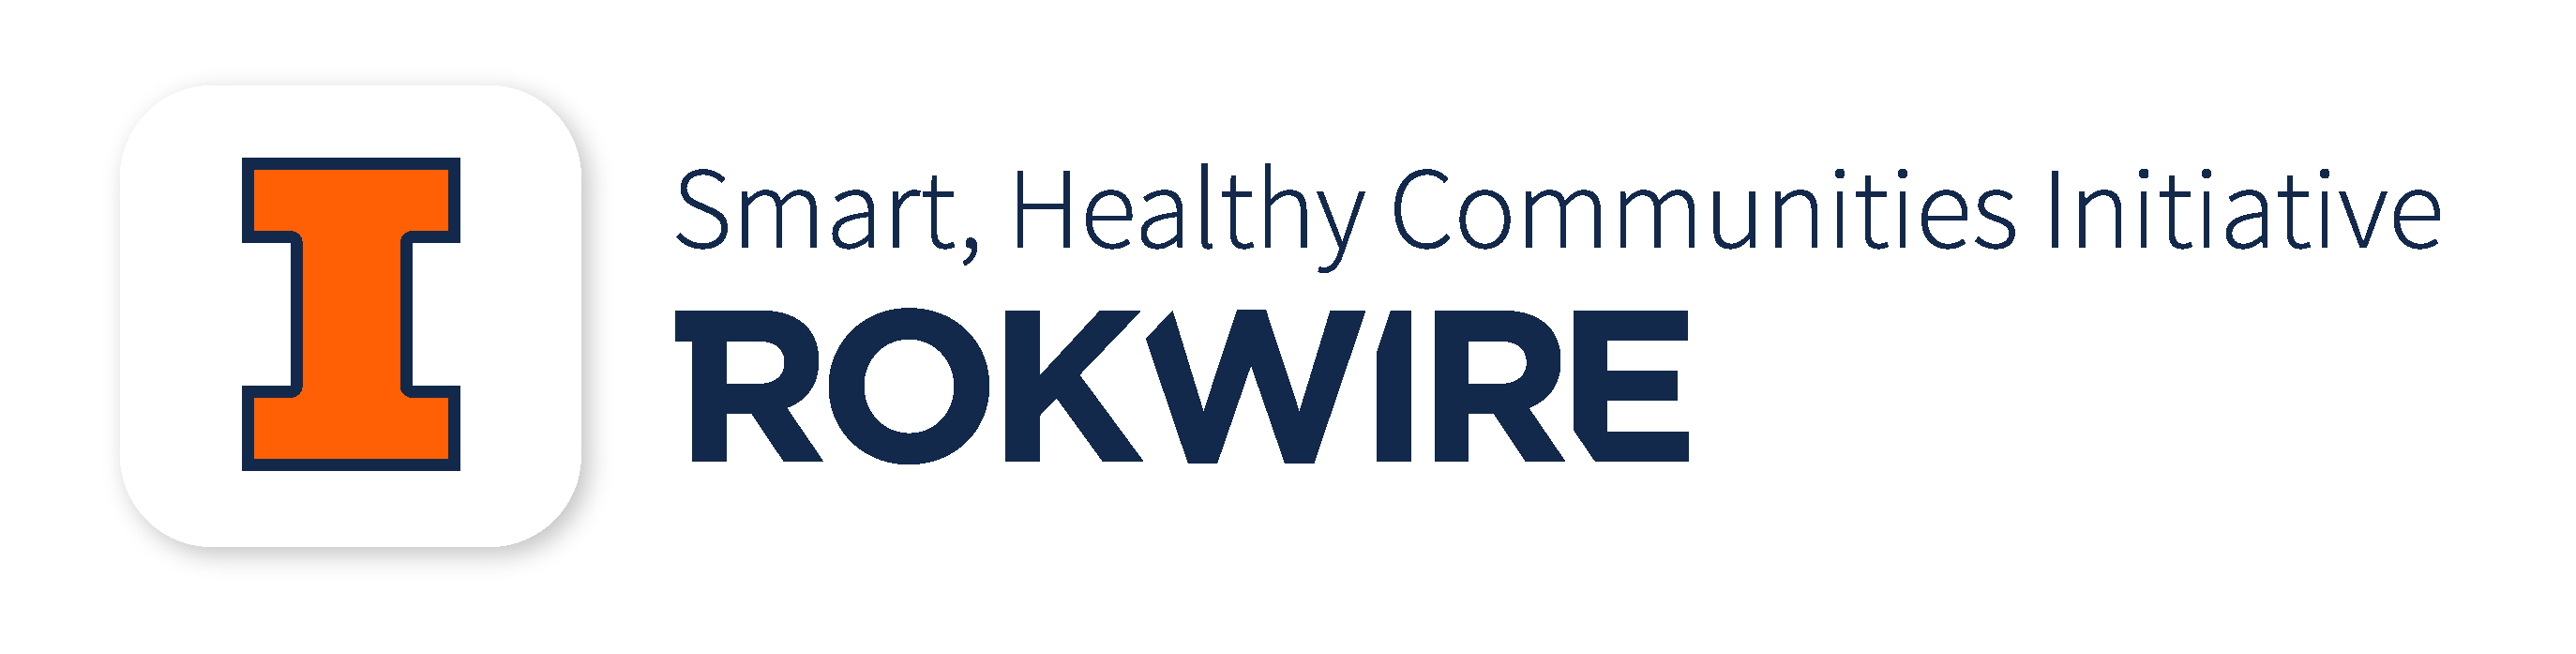 Smart, Healthy Communities Initiative, Rockwire logo.